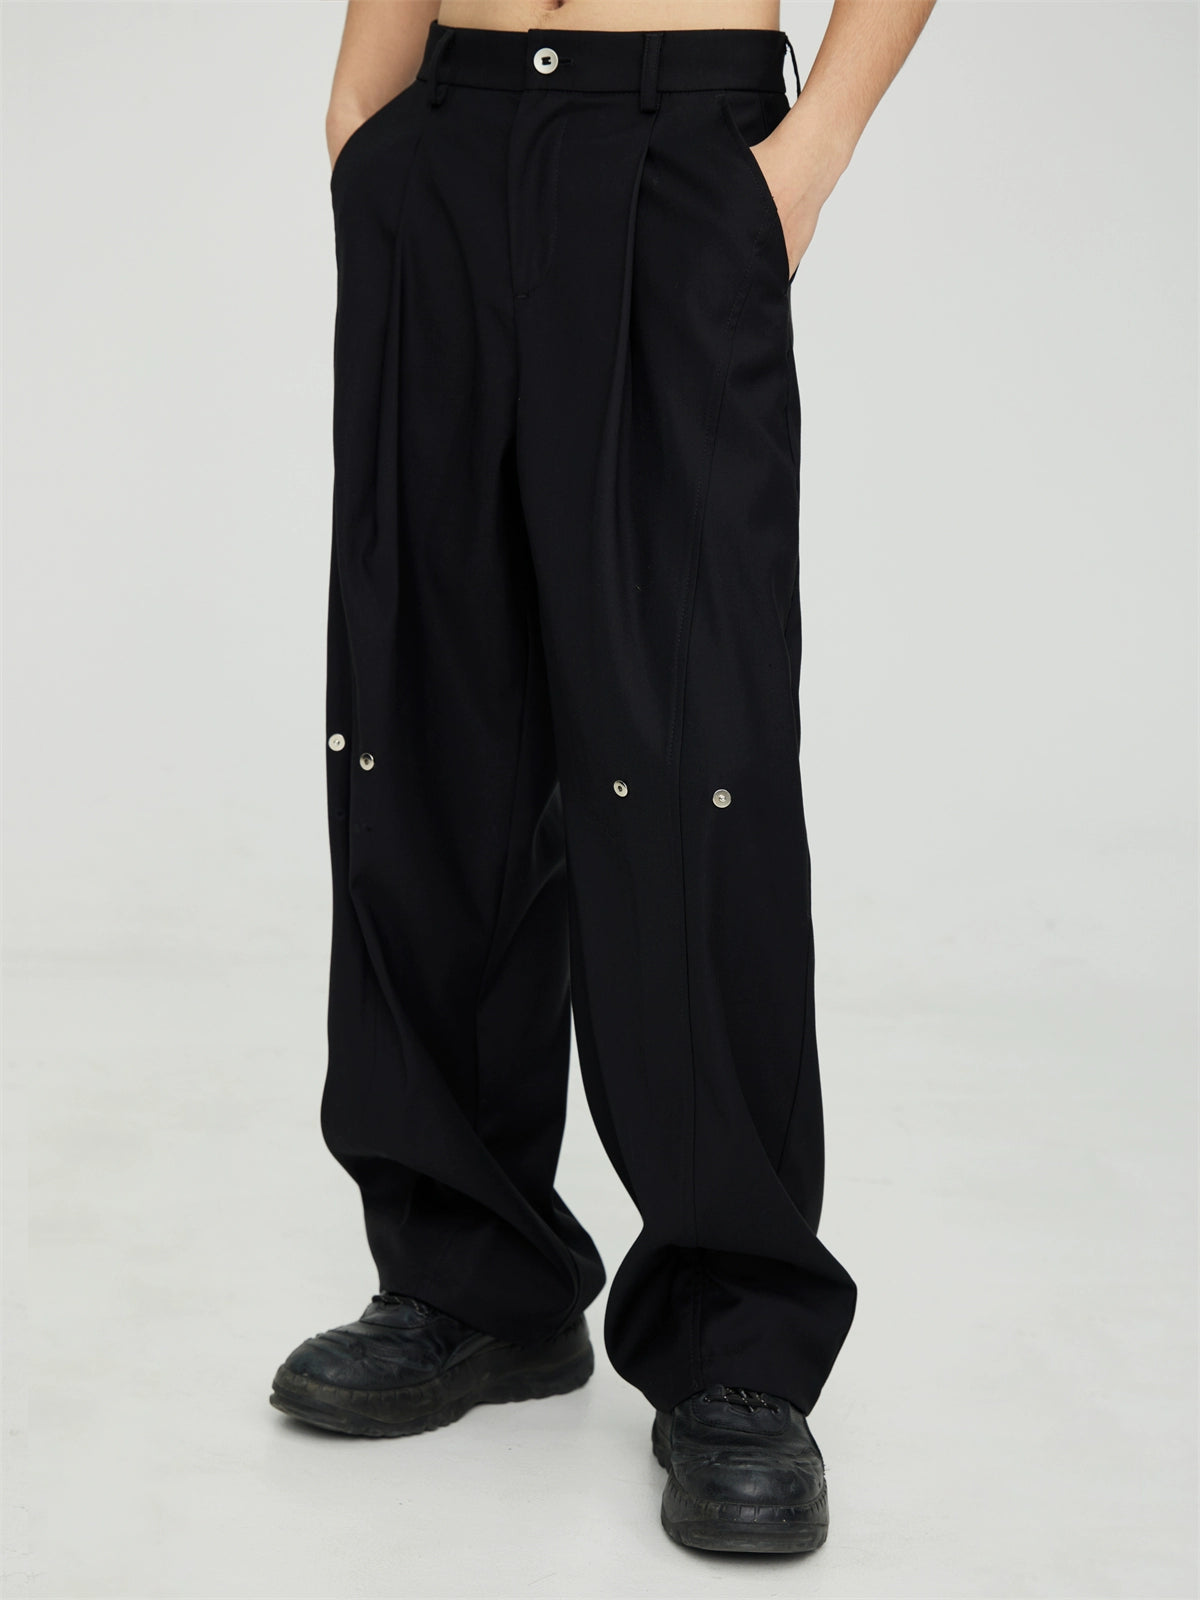 Yamamoto yoji - pantalon de drapé de jambe à l'échelle